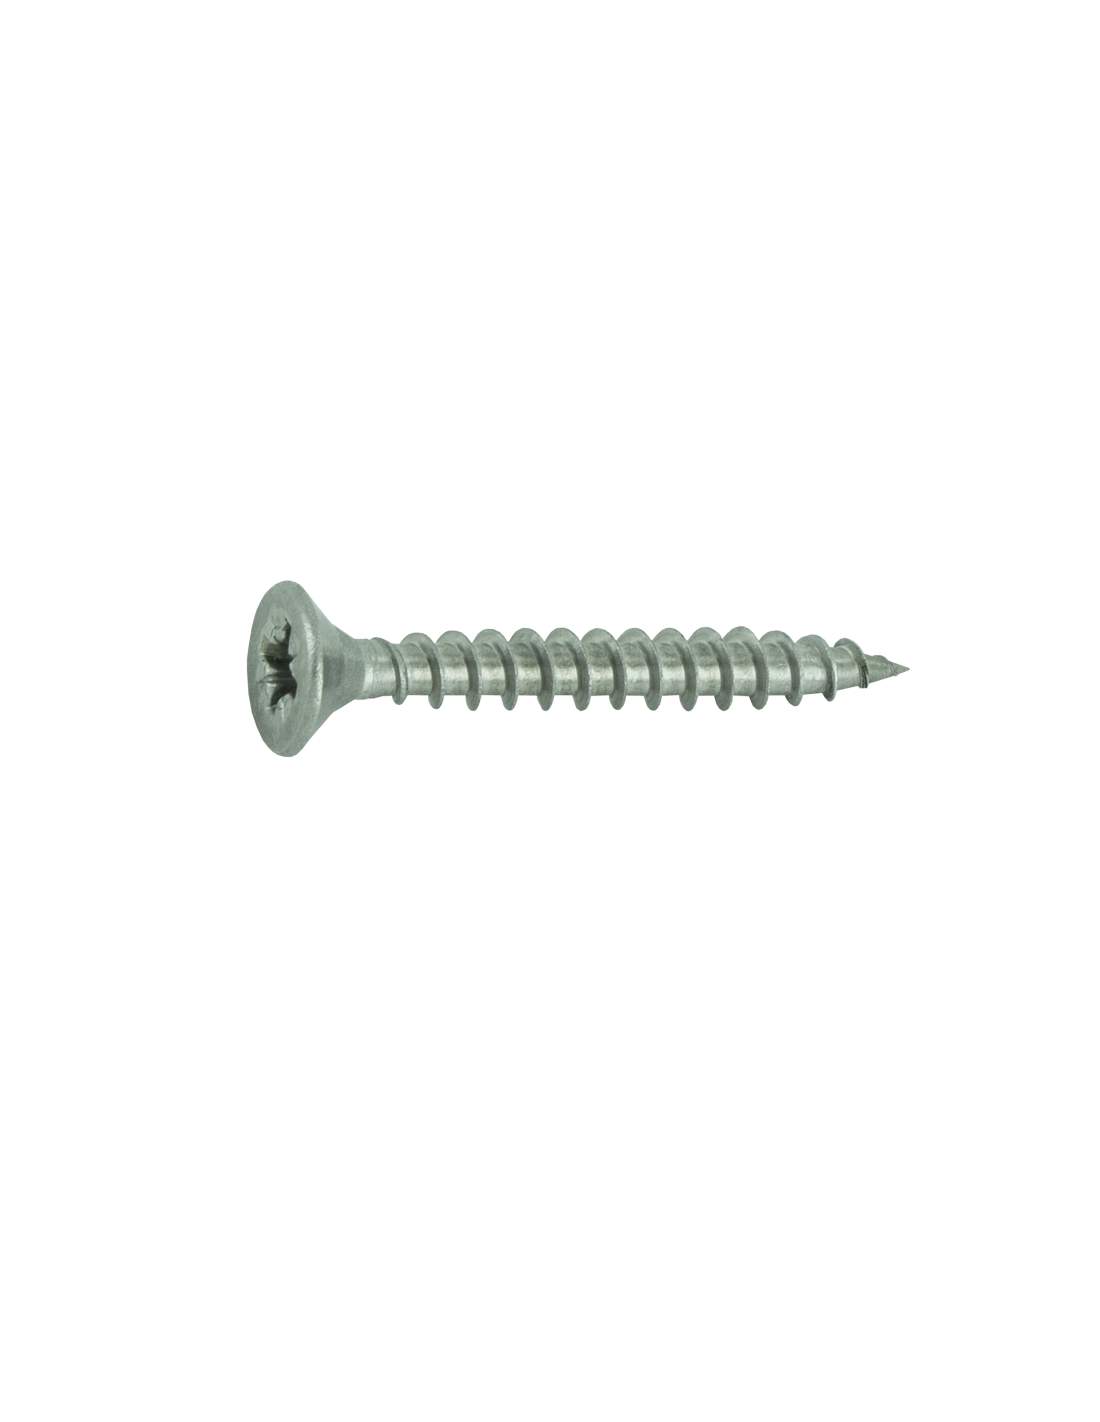 Pozidriv countersunk stainless steel screws A2 4x35, 23 pcs.